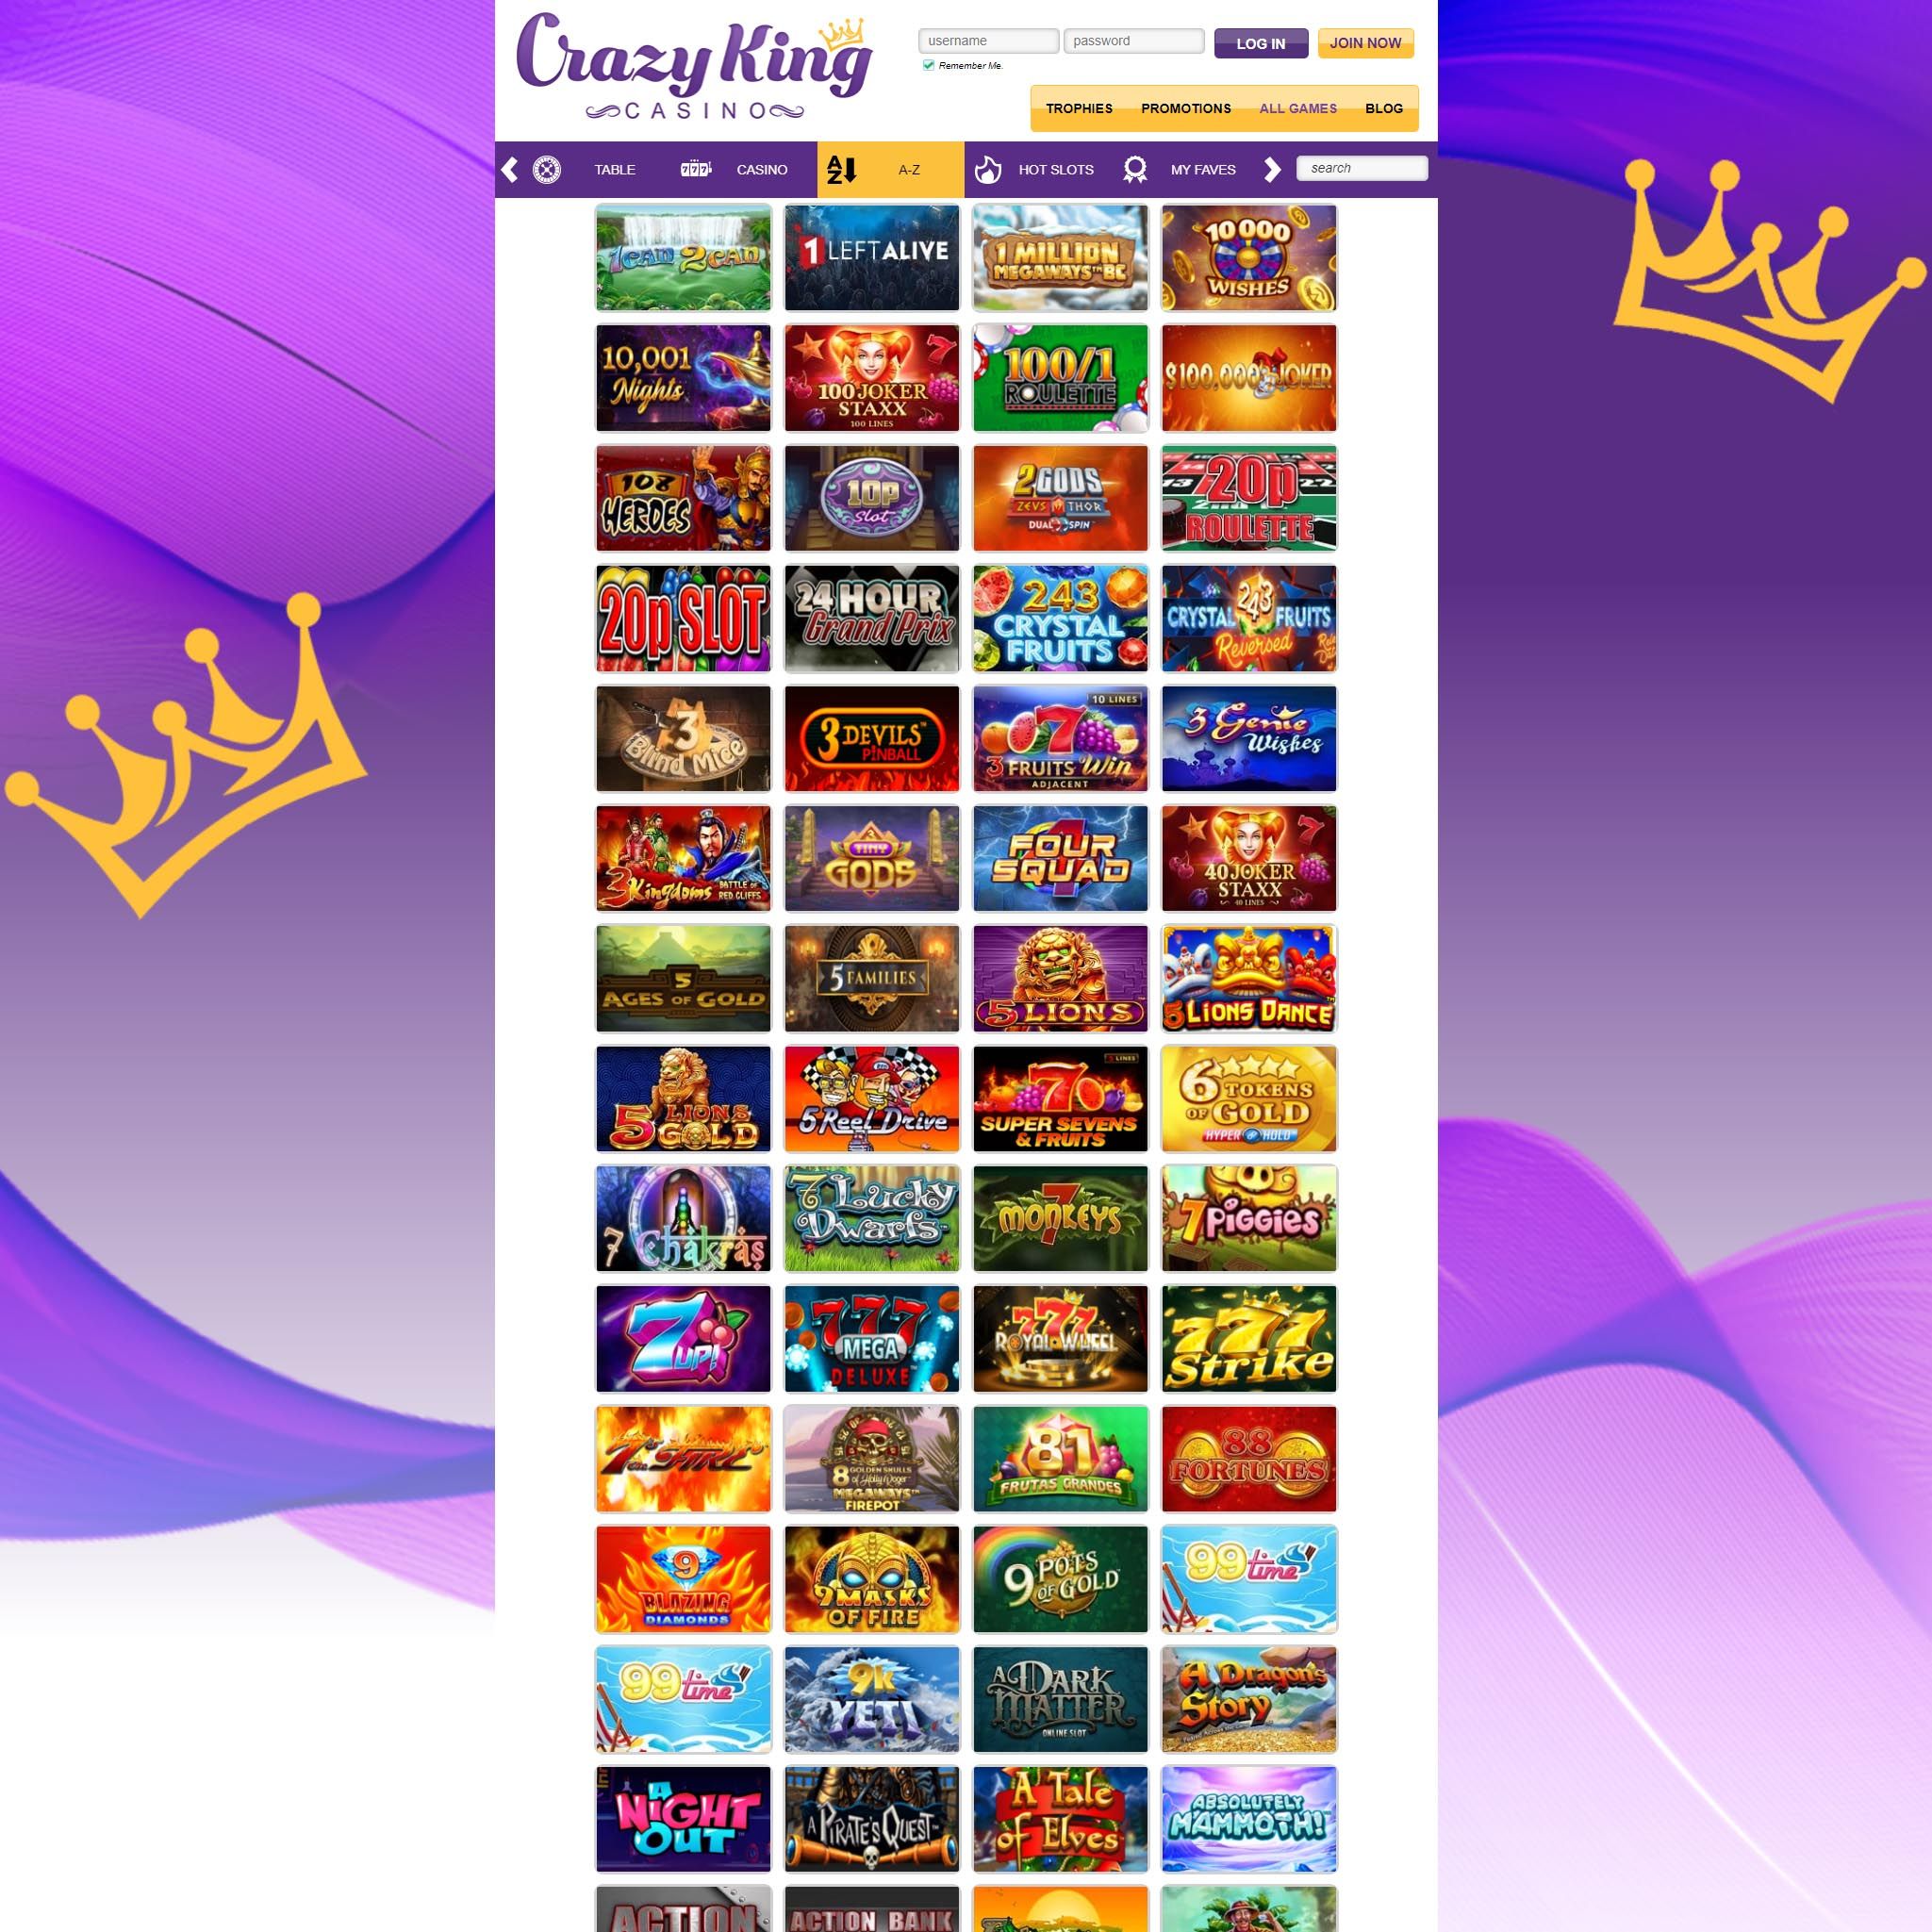 Crazy King Casino full games catalogue